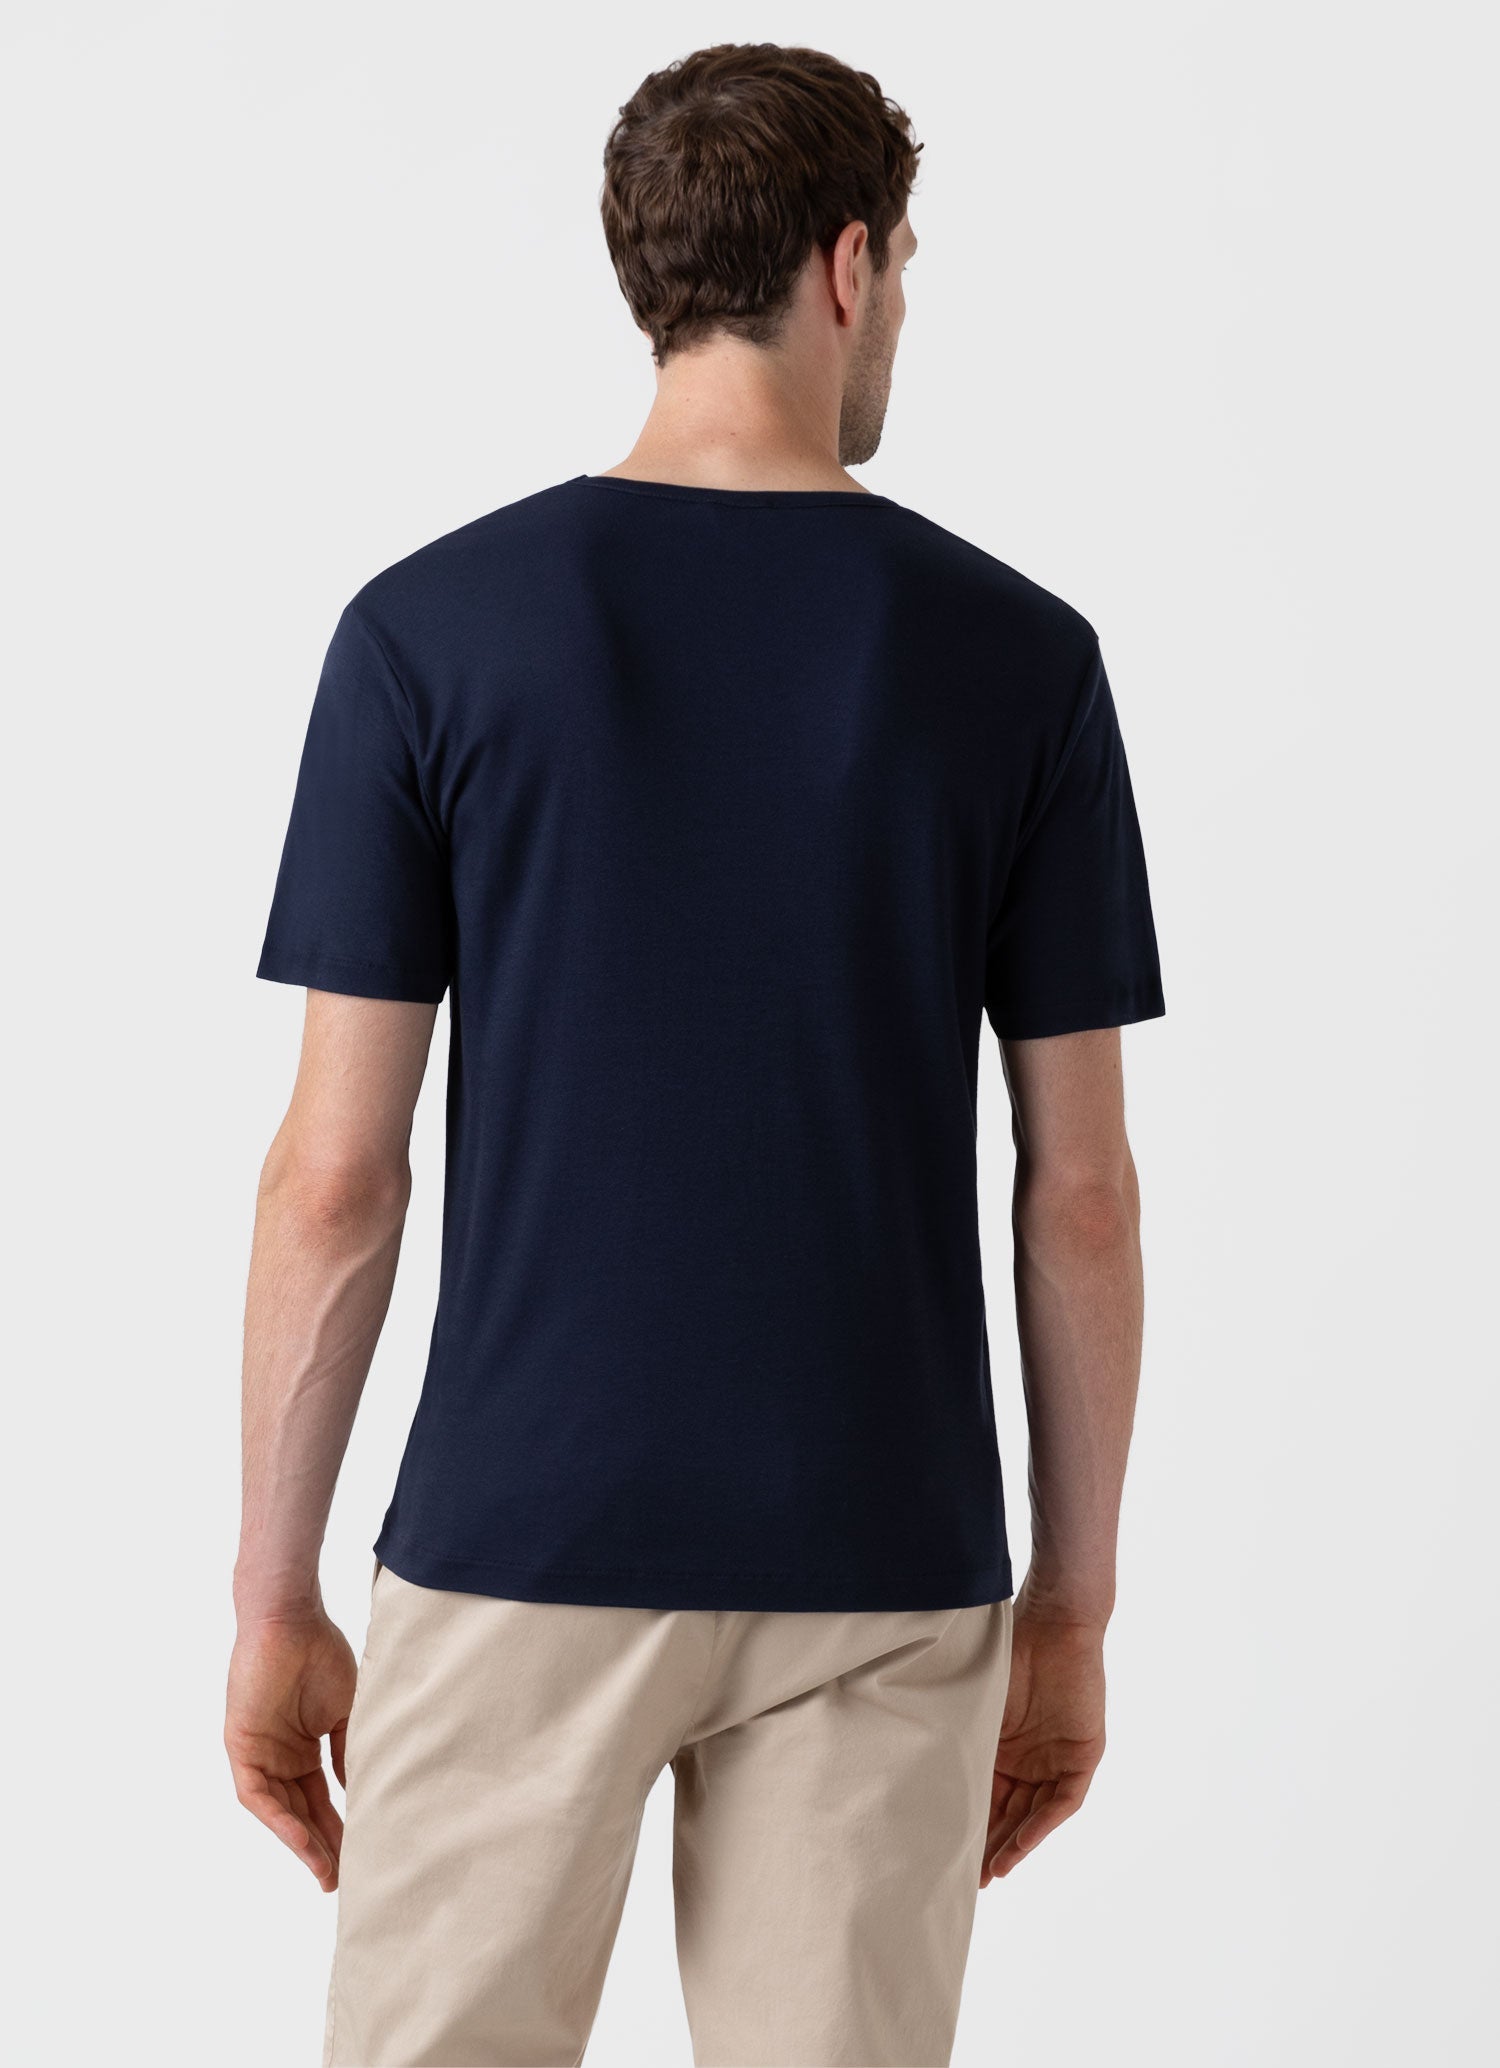 Men's Sea Island Cotton T-shirt in Navy